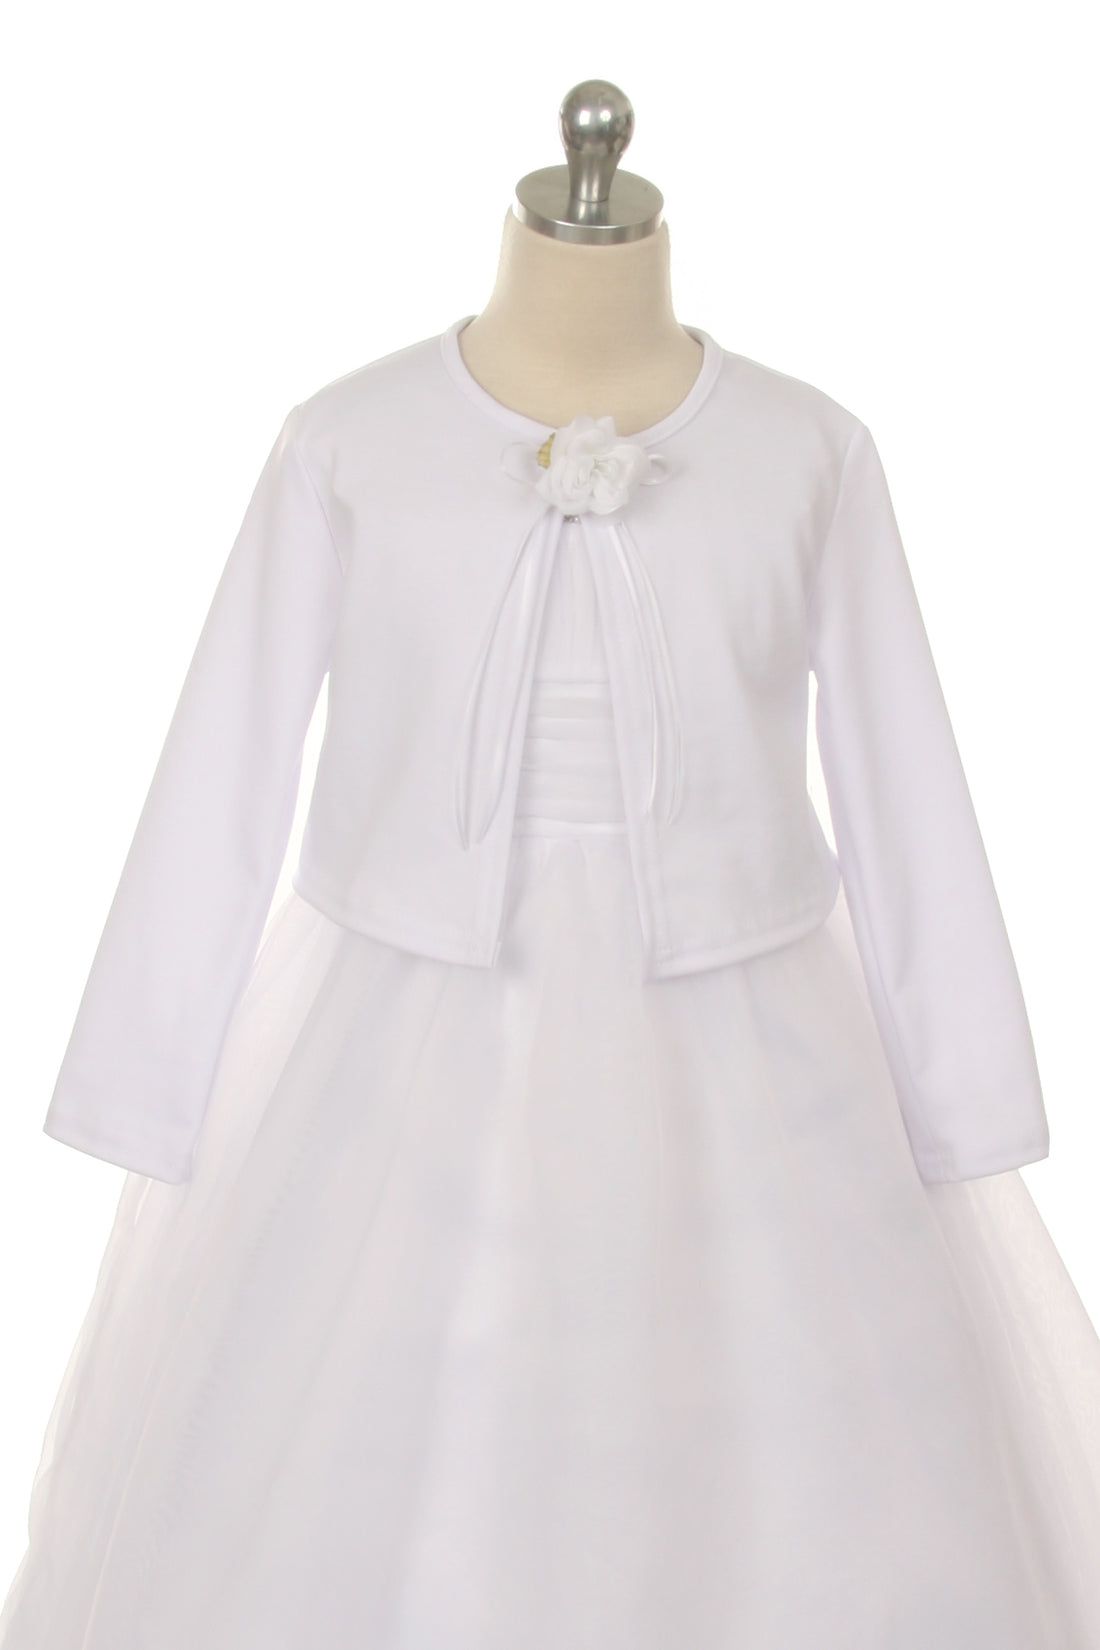 Plain Cardigan Girl Party Dress by AS133 Kids Dream - Girl Formal Dresses